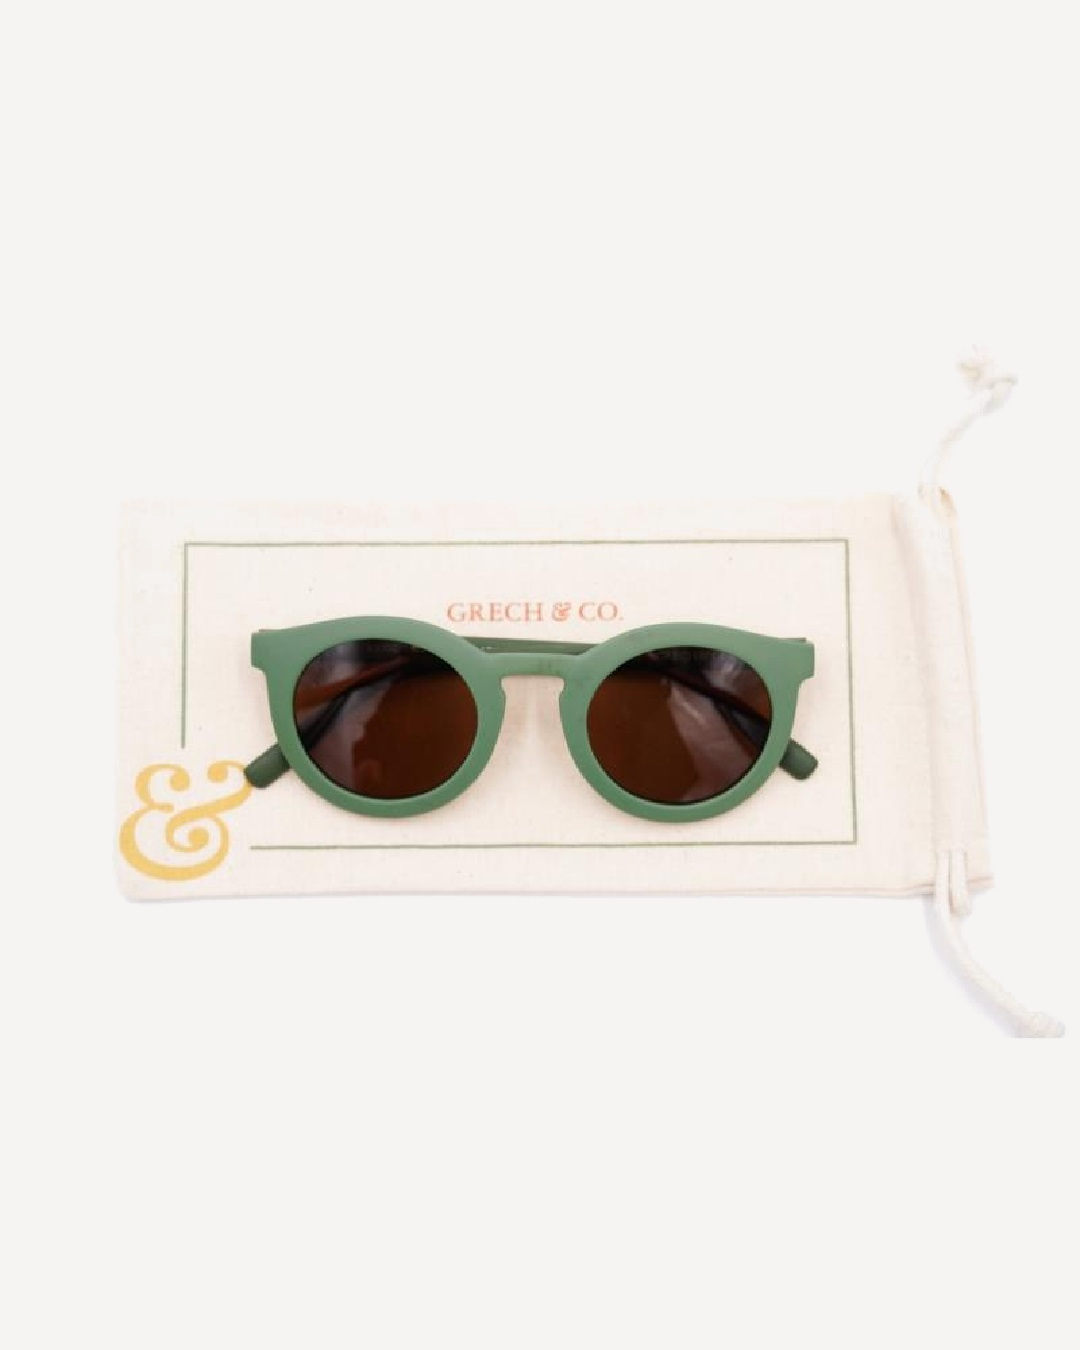 Green sunglasses on sunglass fabric case